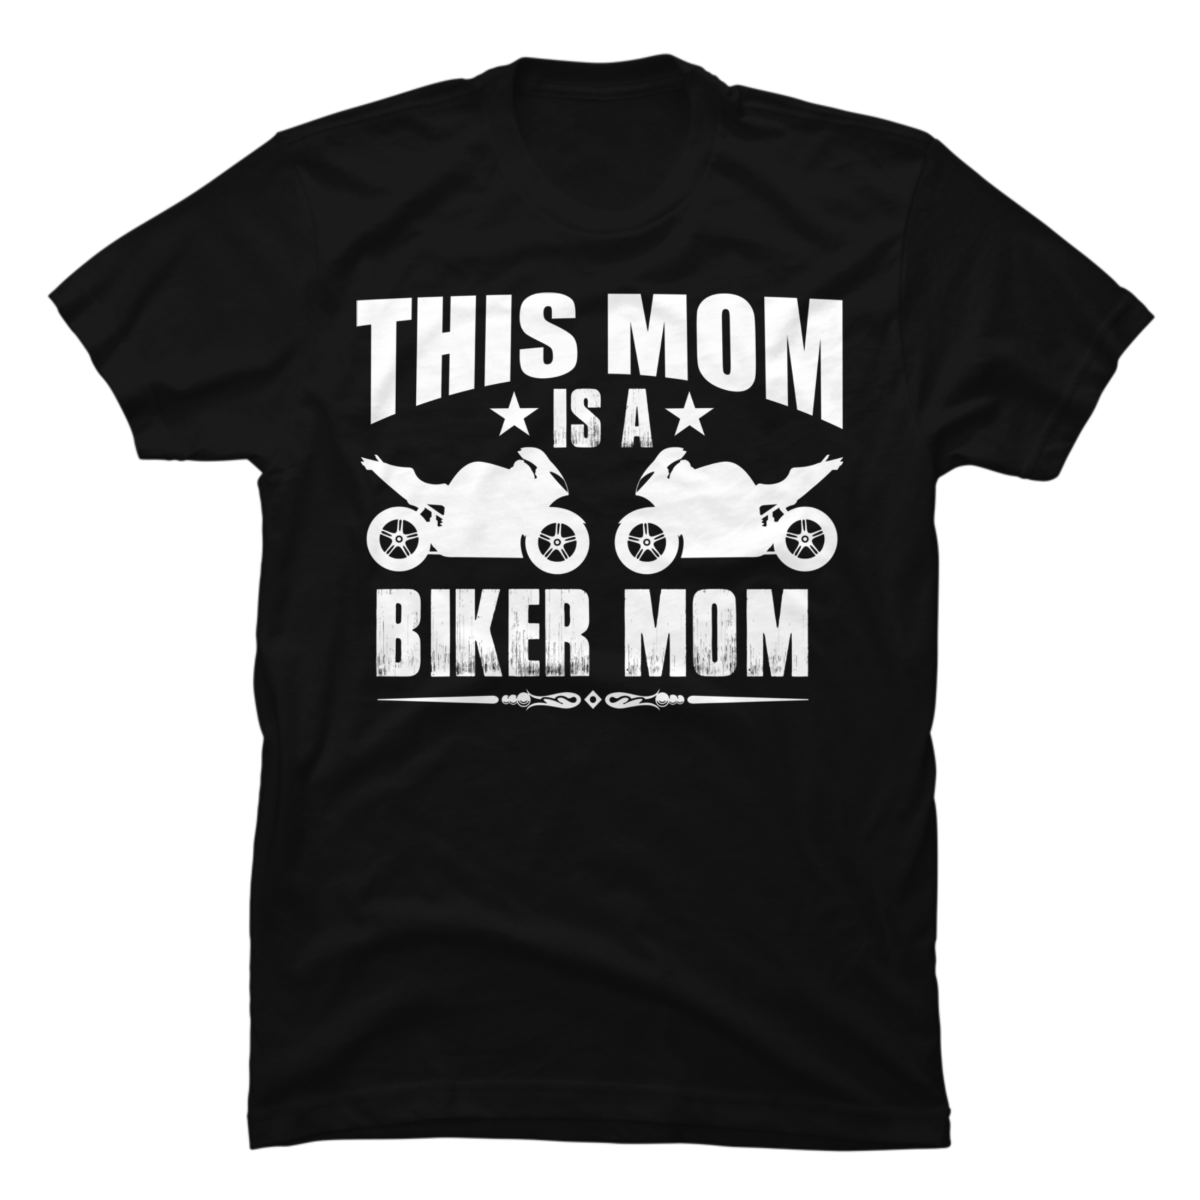 BIKER MOM - Buy t-shirt designs